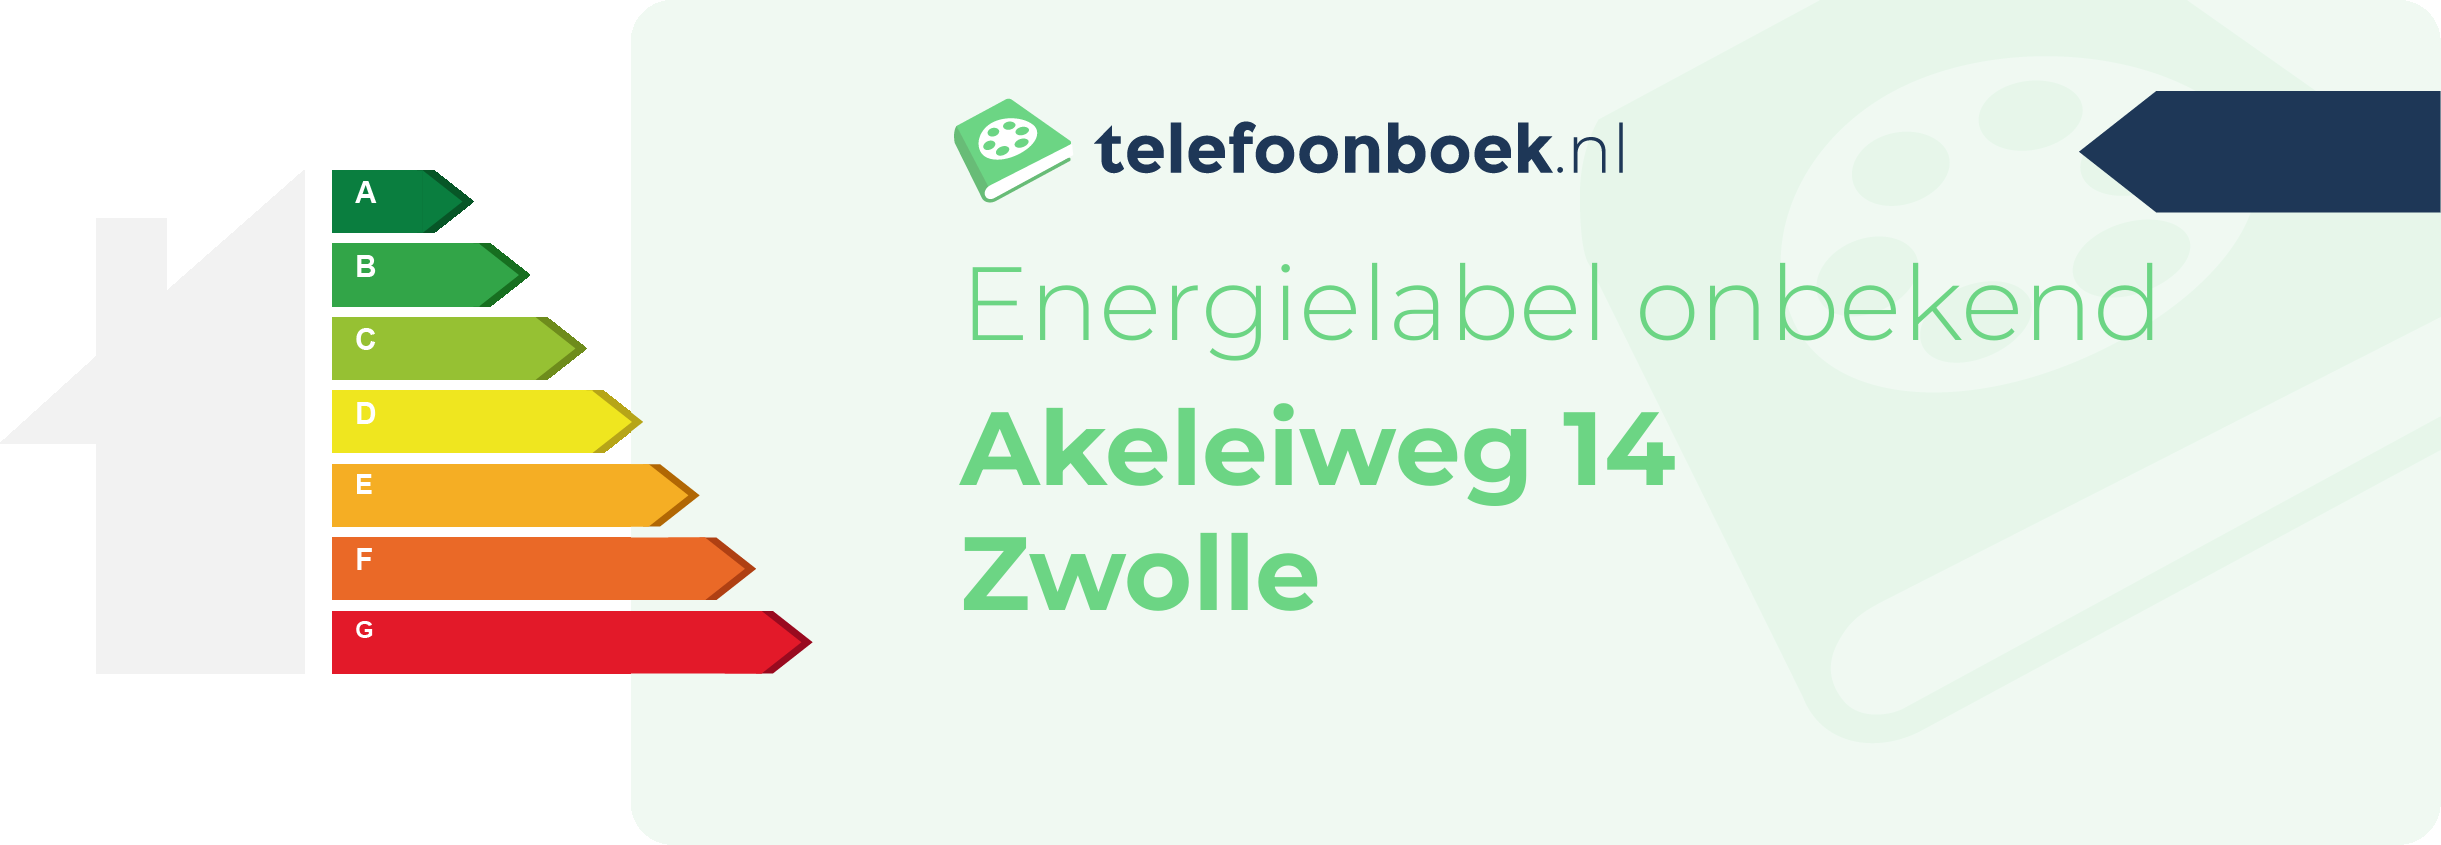 Energielabel Akeleiweg 14 Zwolle